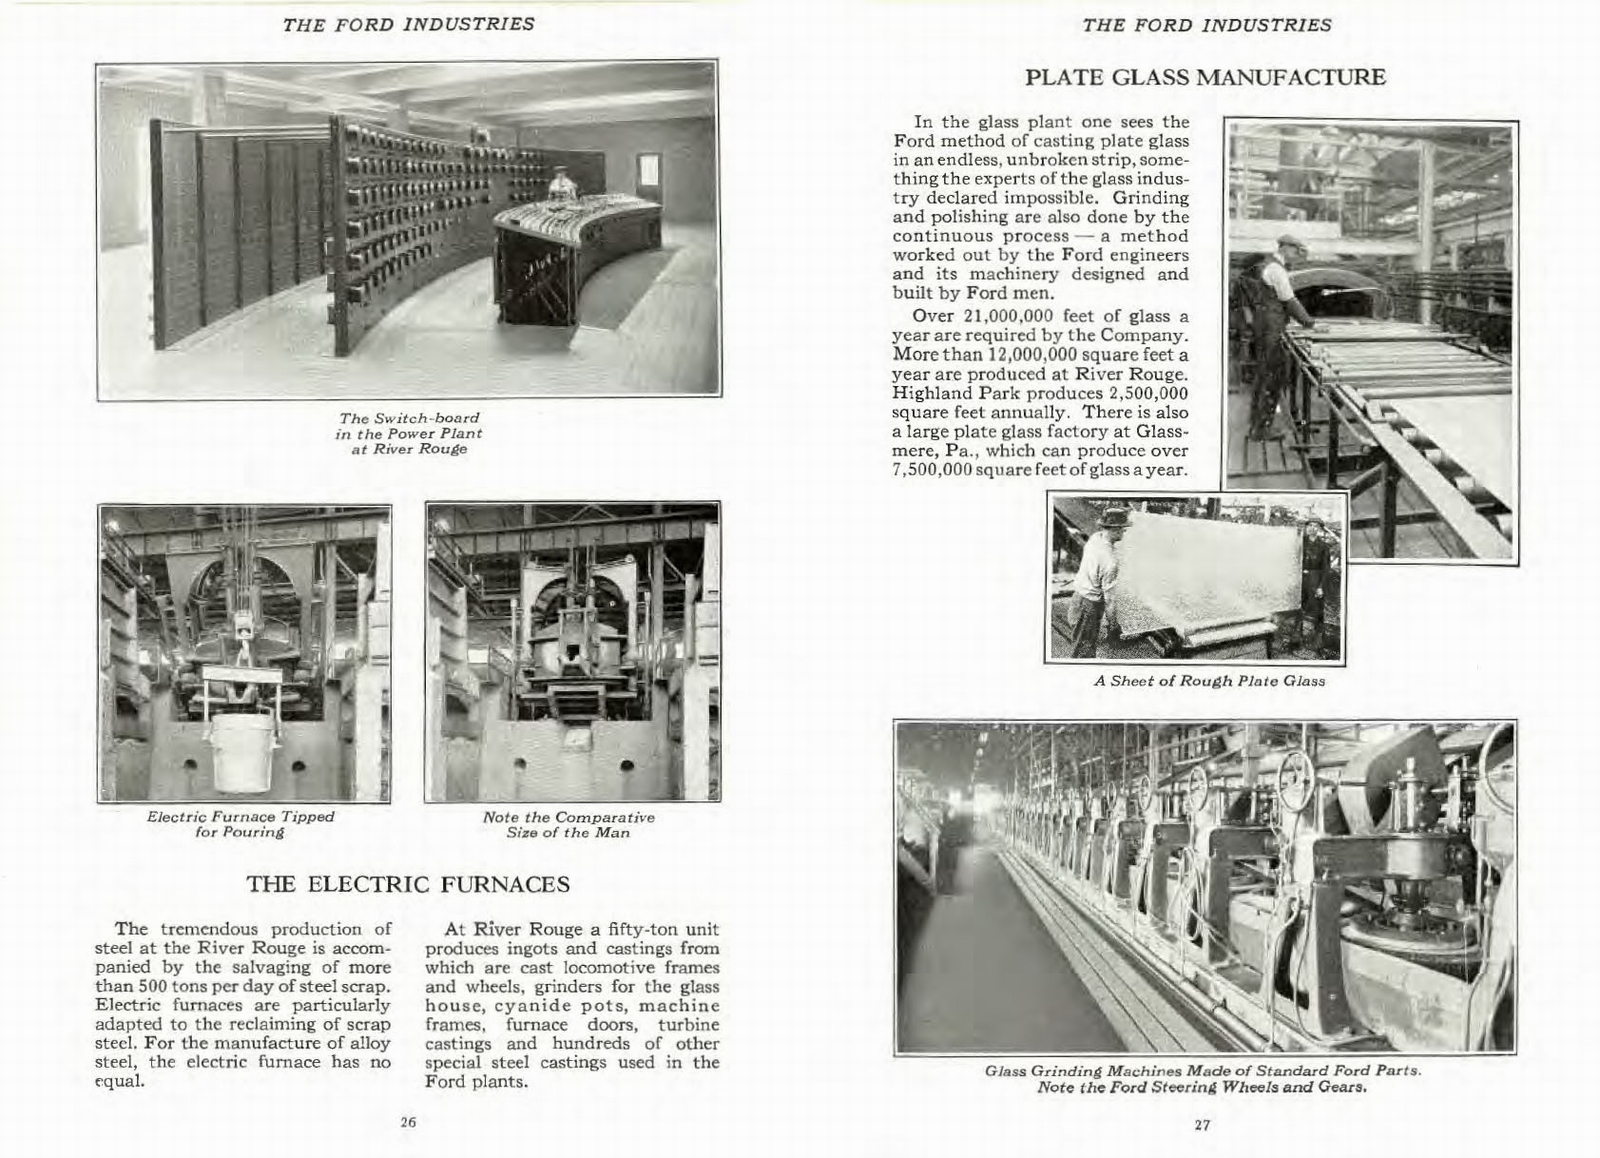 n_1925 -The Ford Industries-26-27.jpg